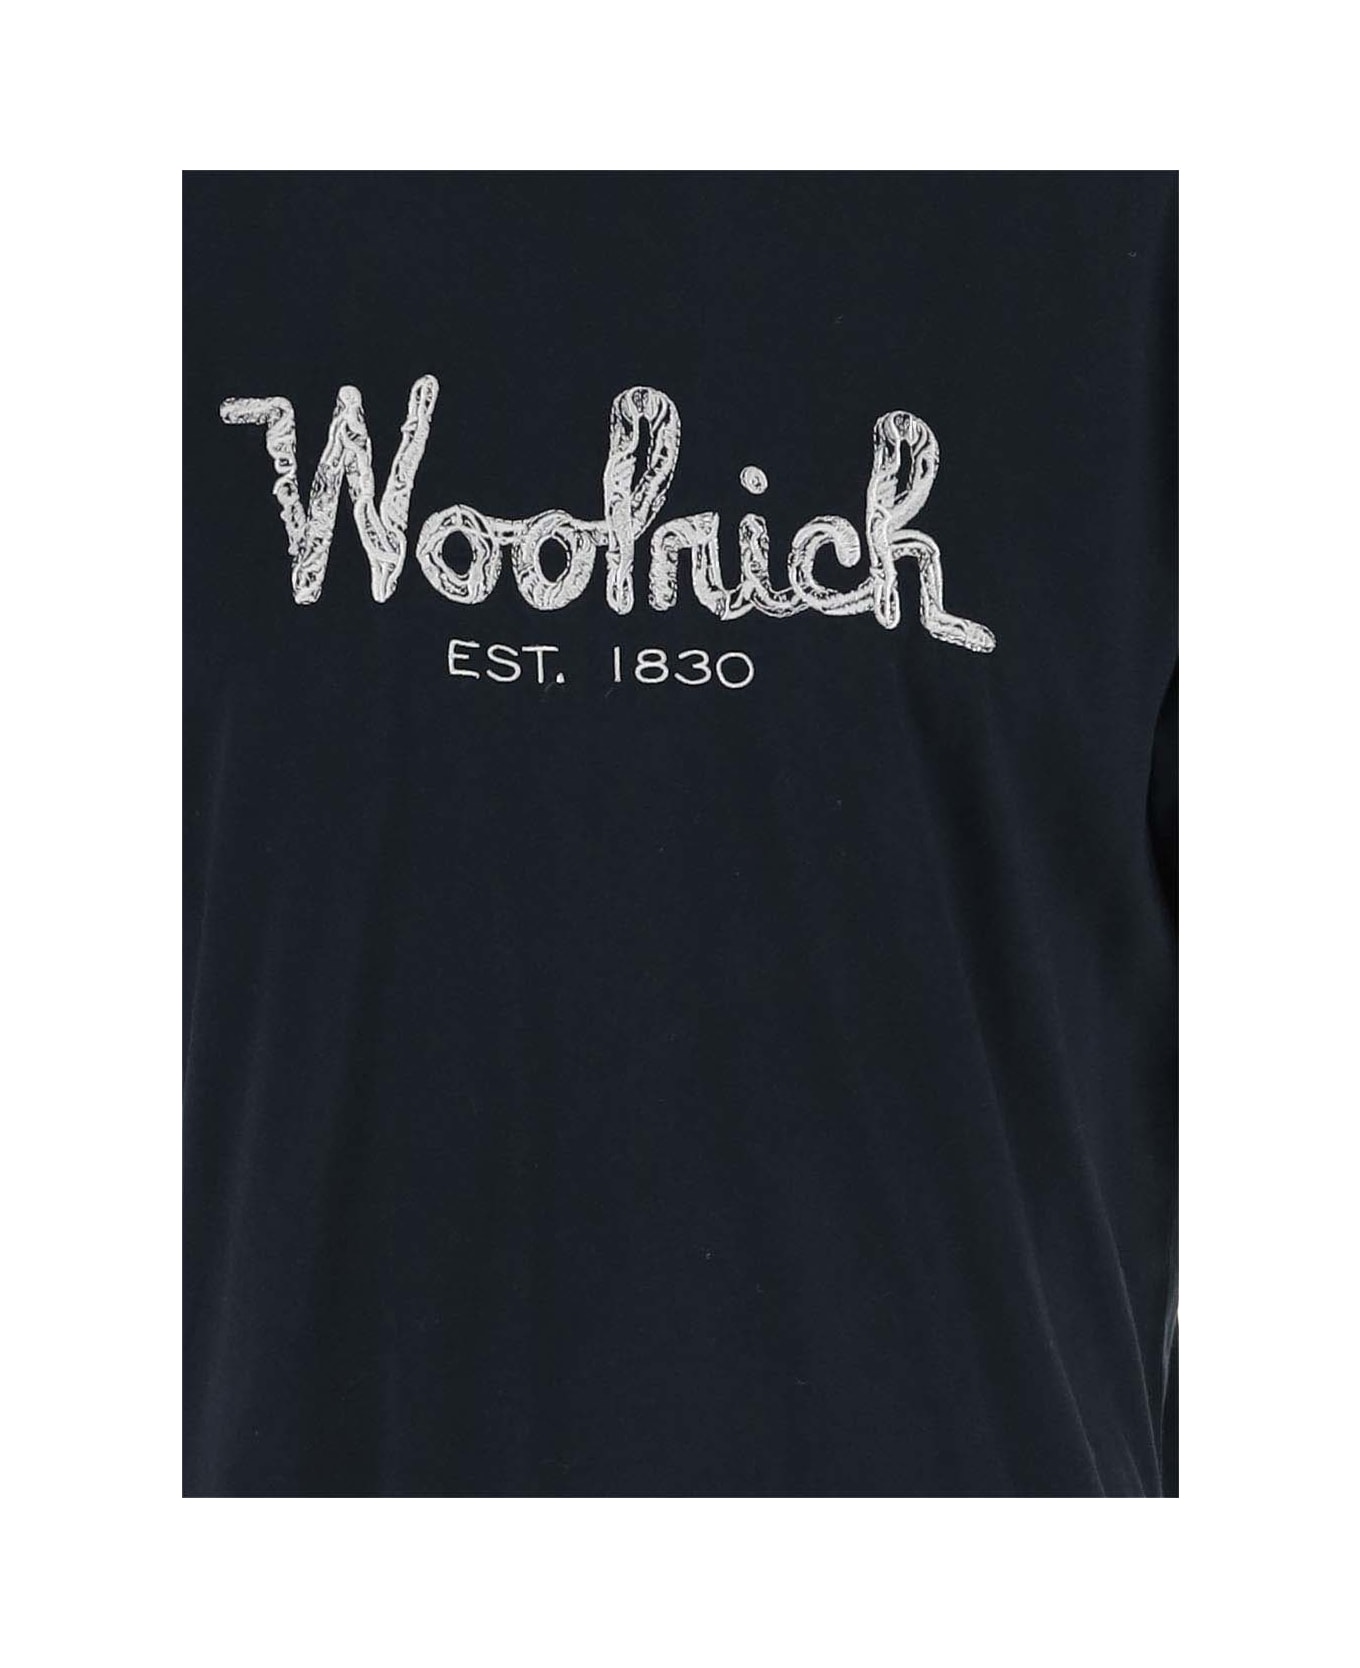 Woolrich Cotton T-shirt With Logo - Blu シャツ